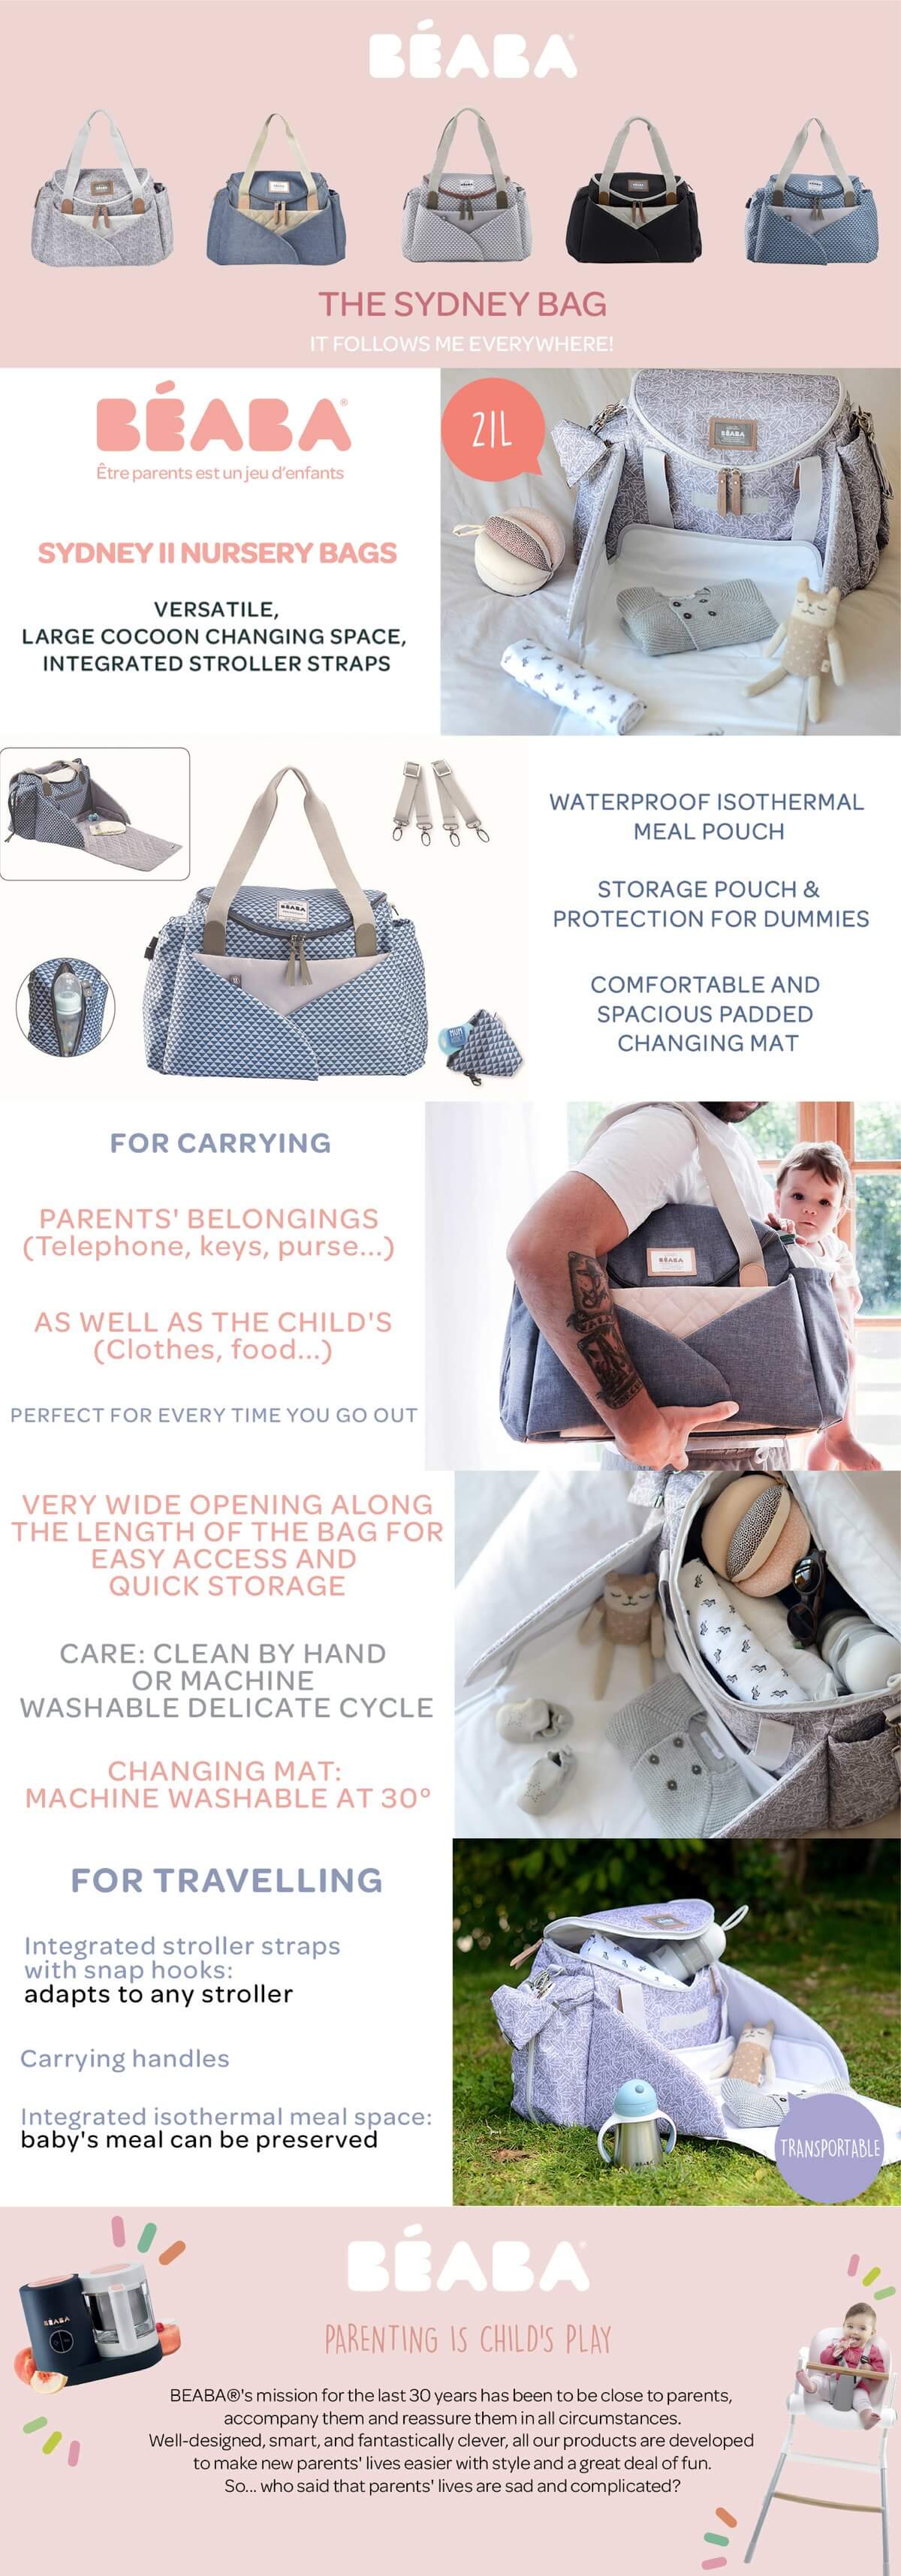 Beaba Sydney II Changing Bag - Play Print, Grey / Coral